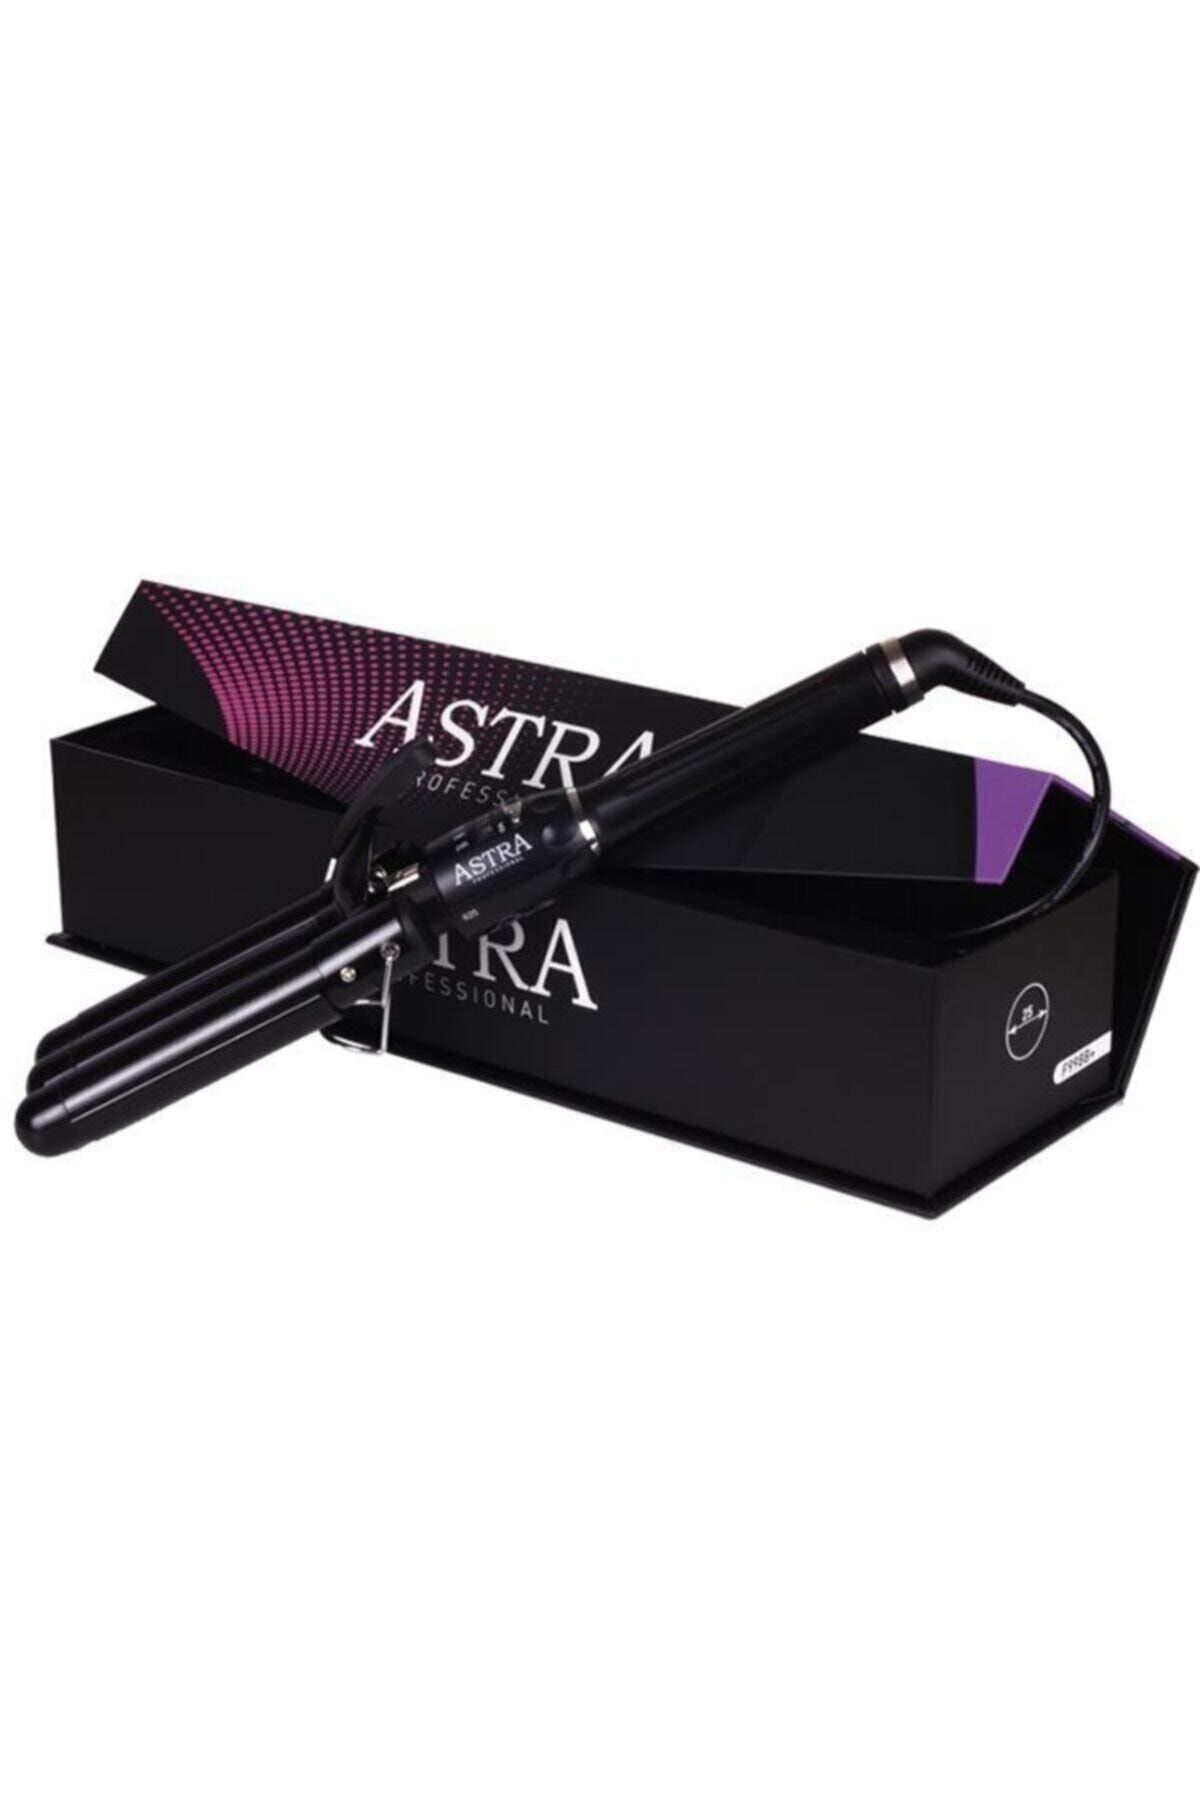 Astra F998B Profesyonel Saç Şekillendirici Wag Maşa 25 mm